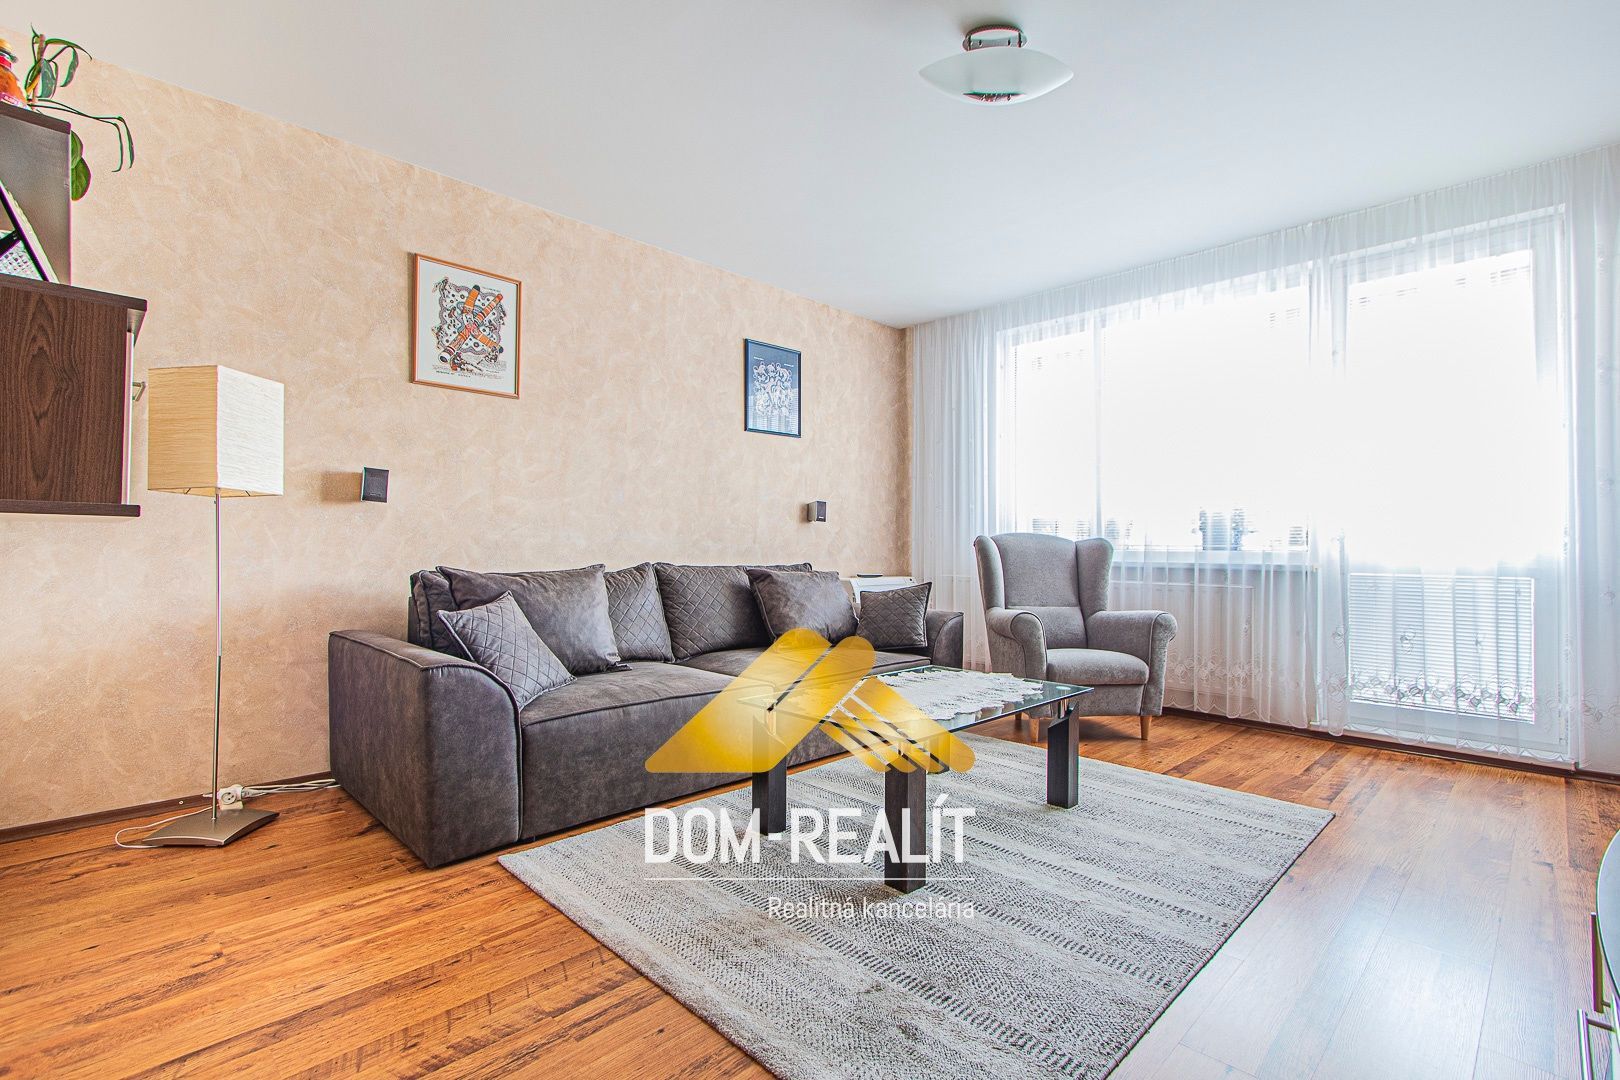 Nehnutelnost DOM-REALÍT ponúka  zrekonštruovaný 3izb byt na Jasovskej ul. v Petržalke